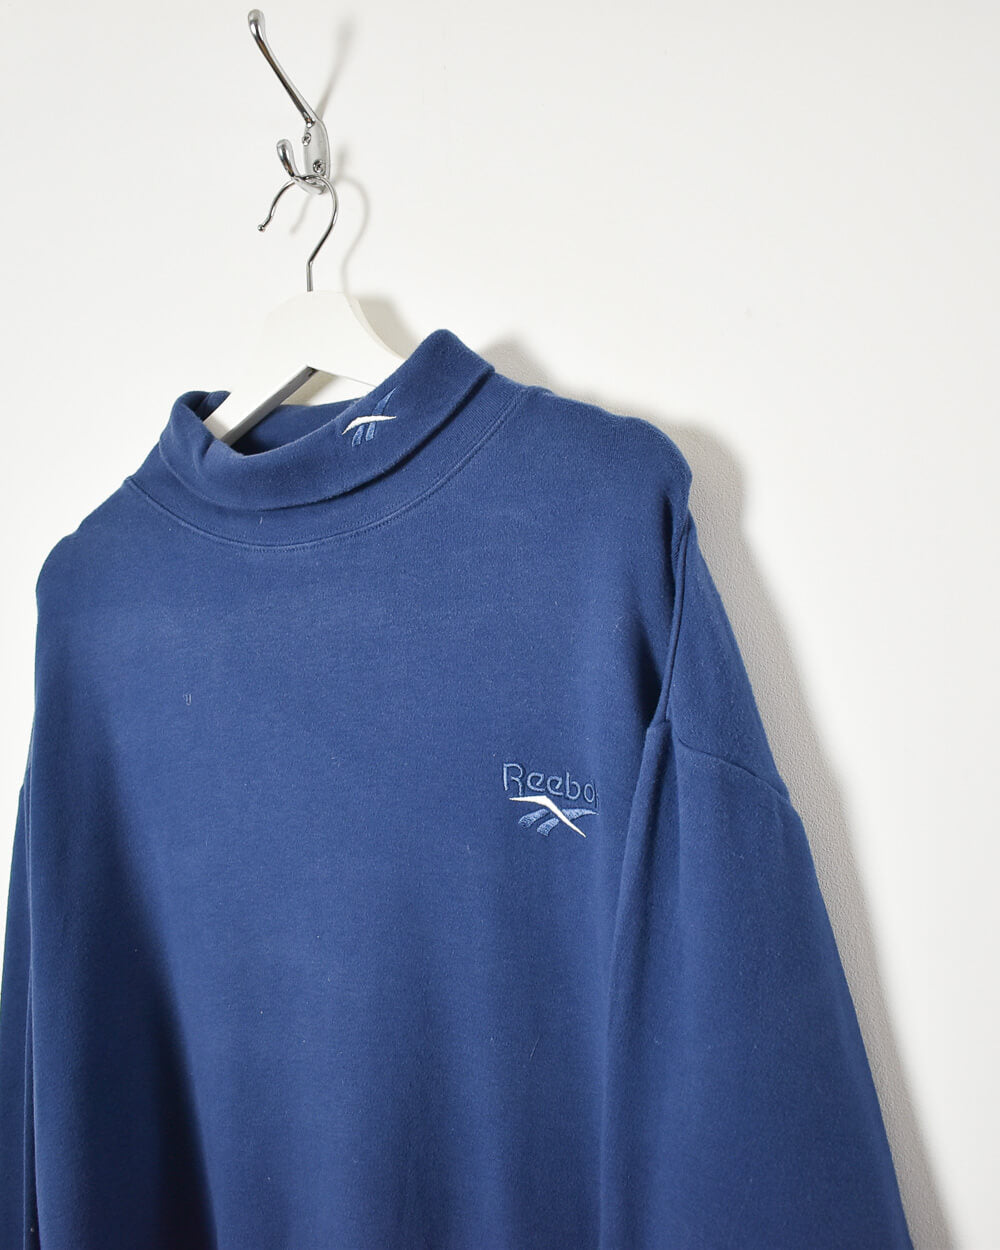 Blue Reebok Turtle Neck Sweatshirt - Medium